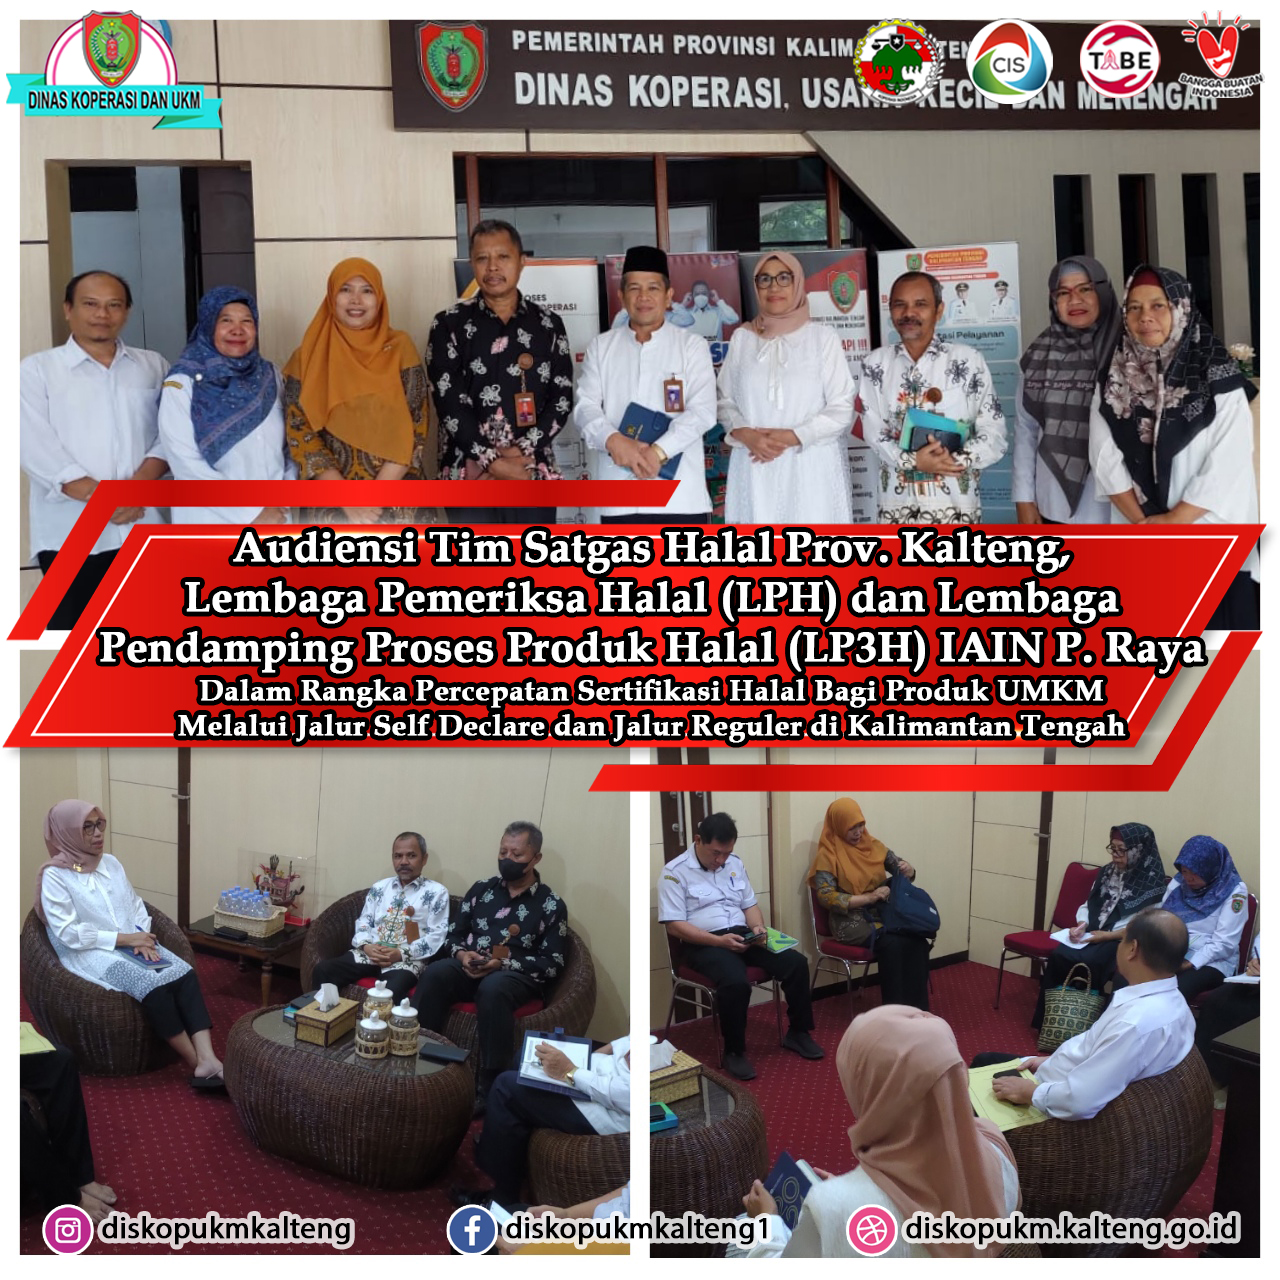 Audiensi Tim Satgas Halal Provinsi Kalimantan Tengah, Lembaga Pemeriksa Halal (LPH) dan Lembaga Pendamping Proses Produk Halal (LP3H) IAIN Palangka Ra